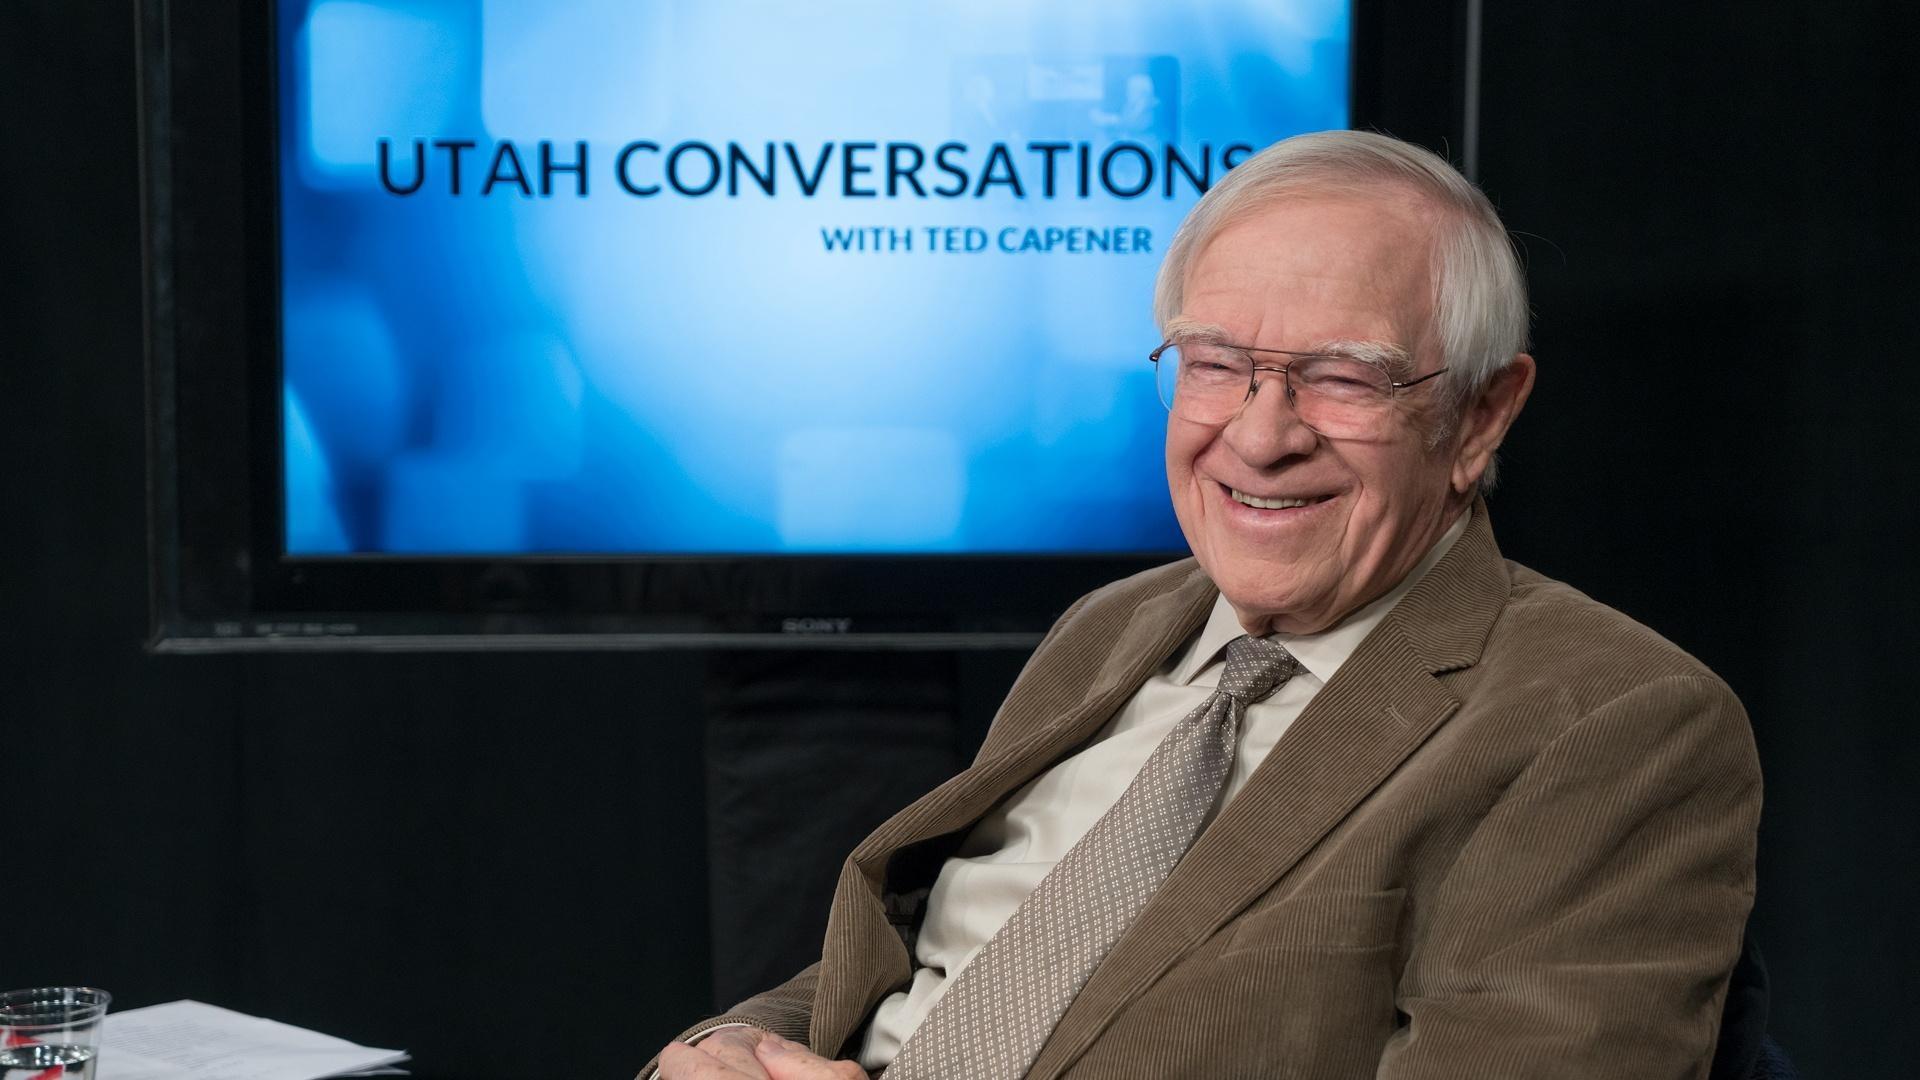 Ted Capener, Host of Utah Conversations